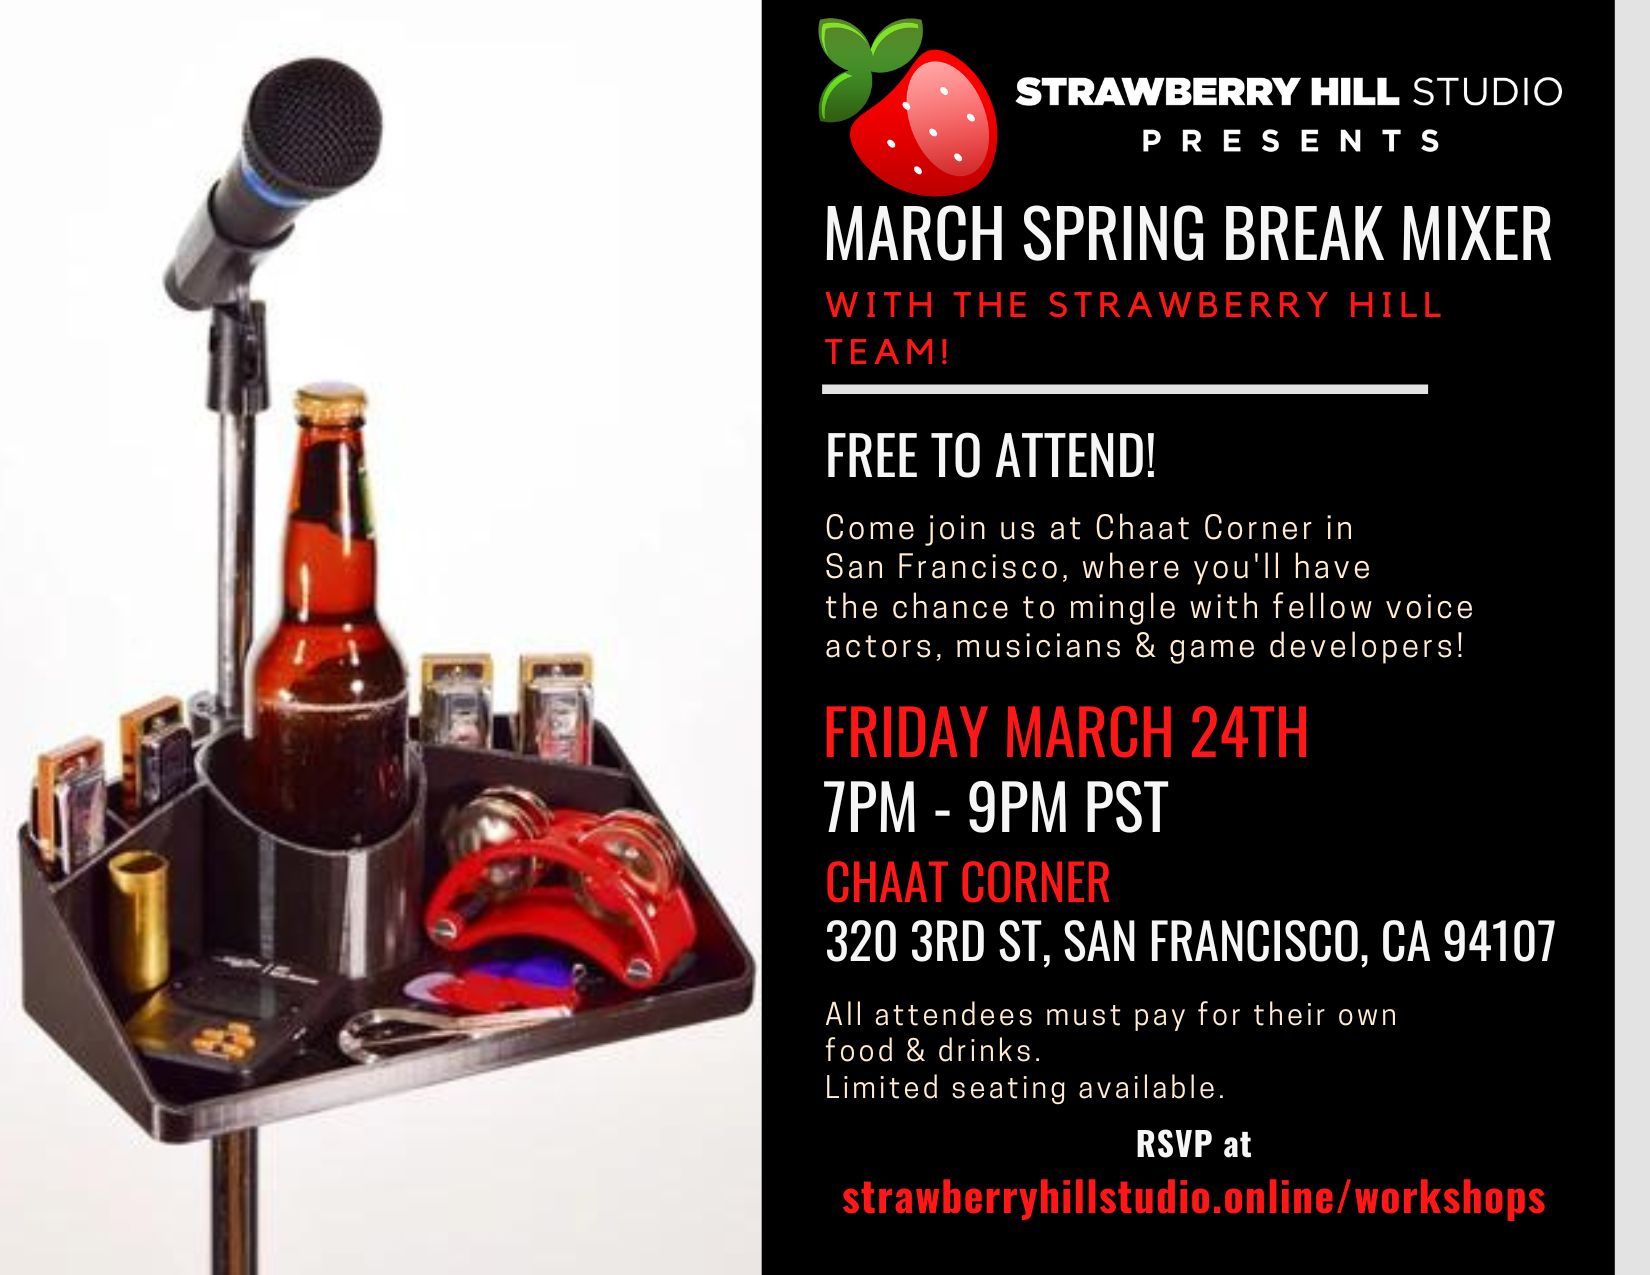 FREE EVENT - Strawberry Hill Studio March Spring Break Mixer